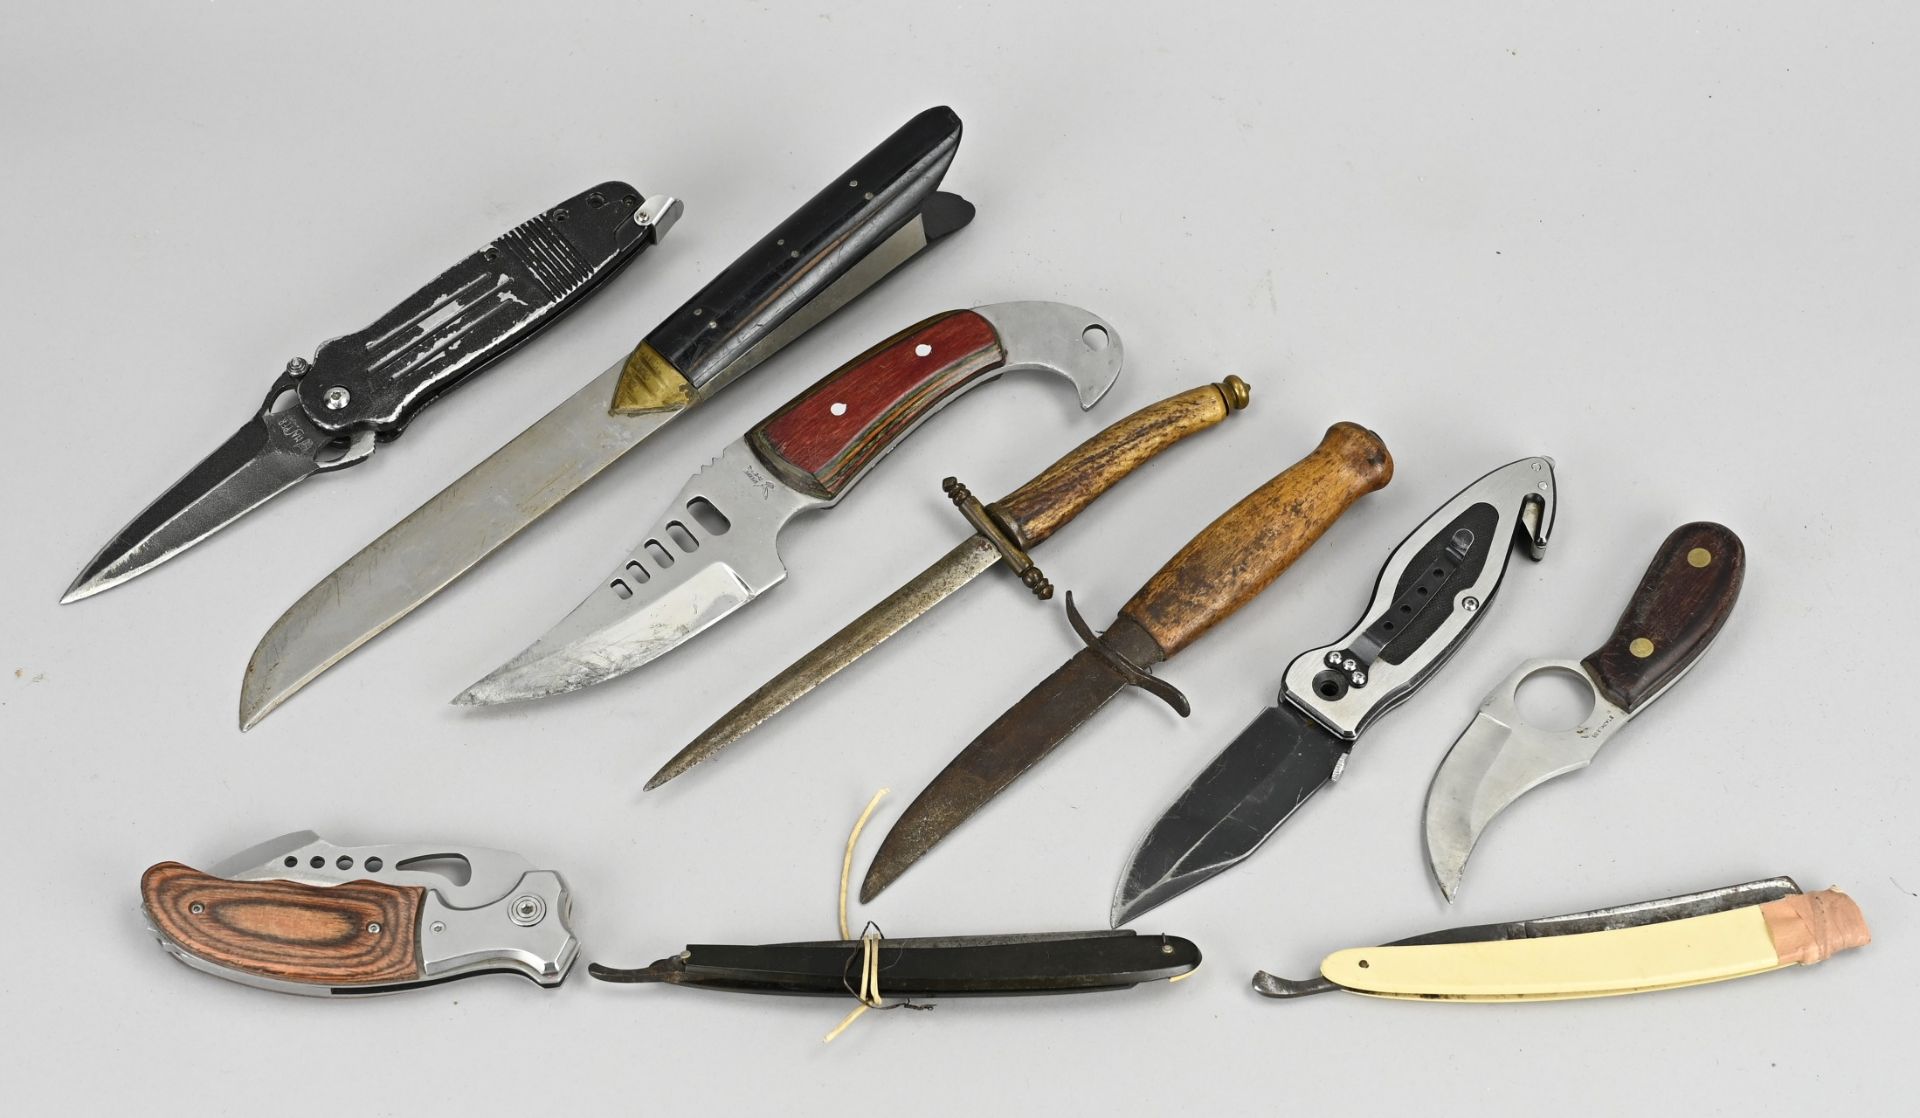 Lot of old knives, L 14 - 25 cm.